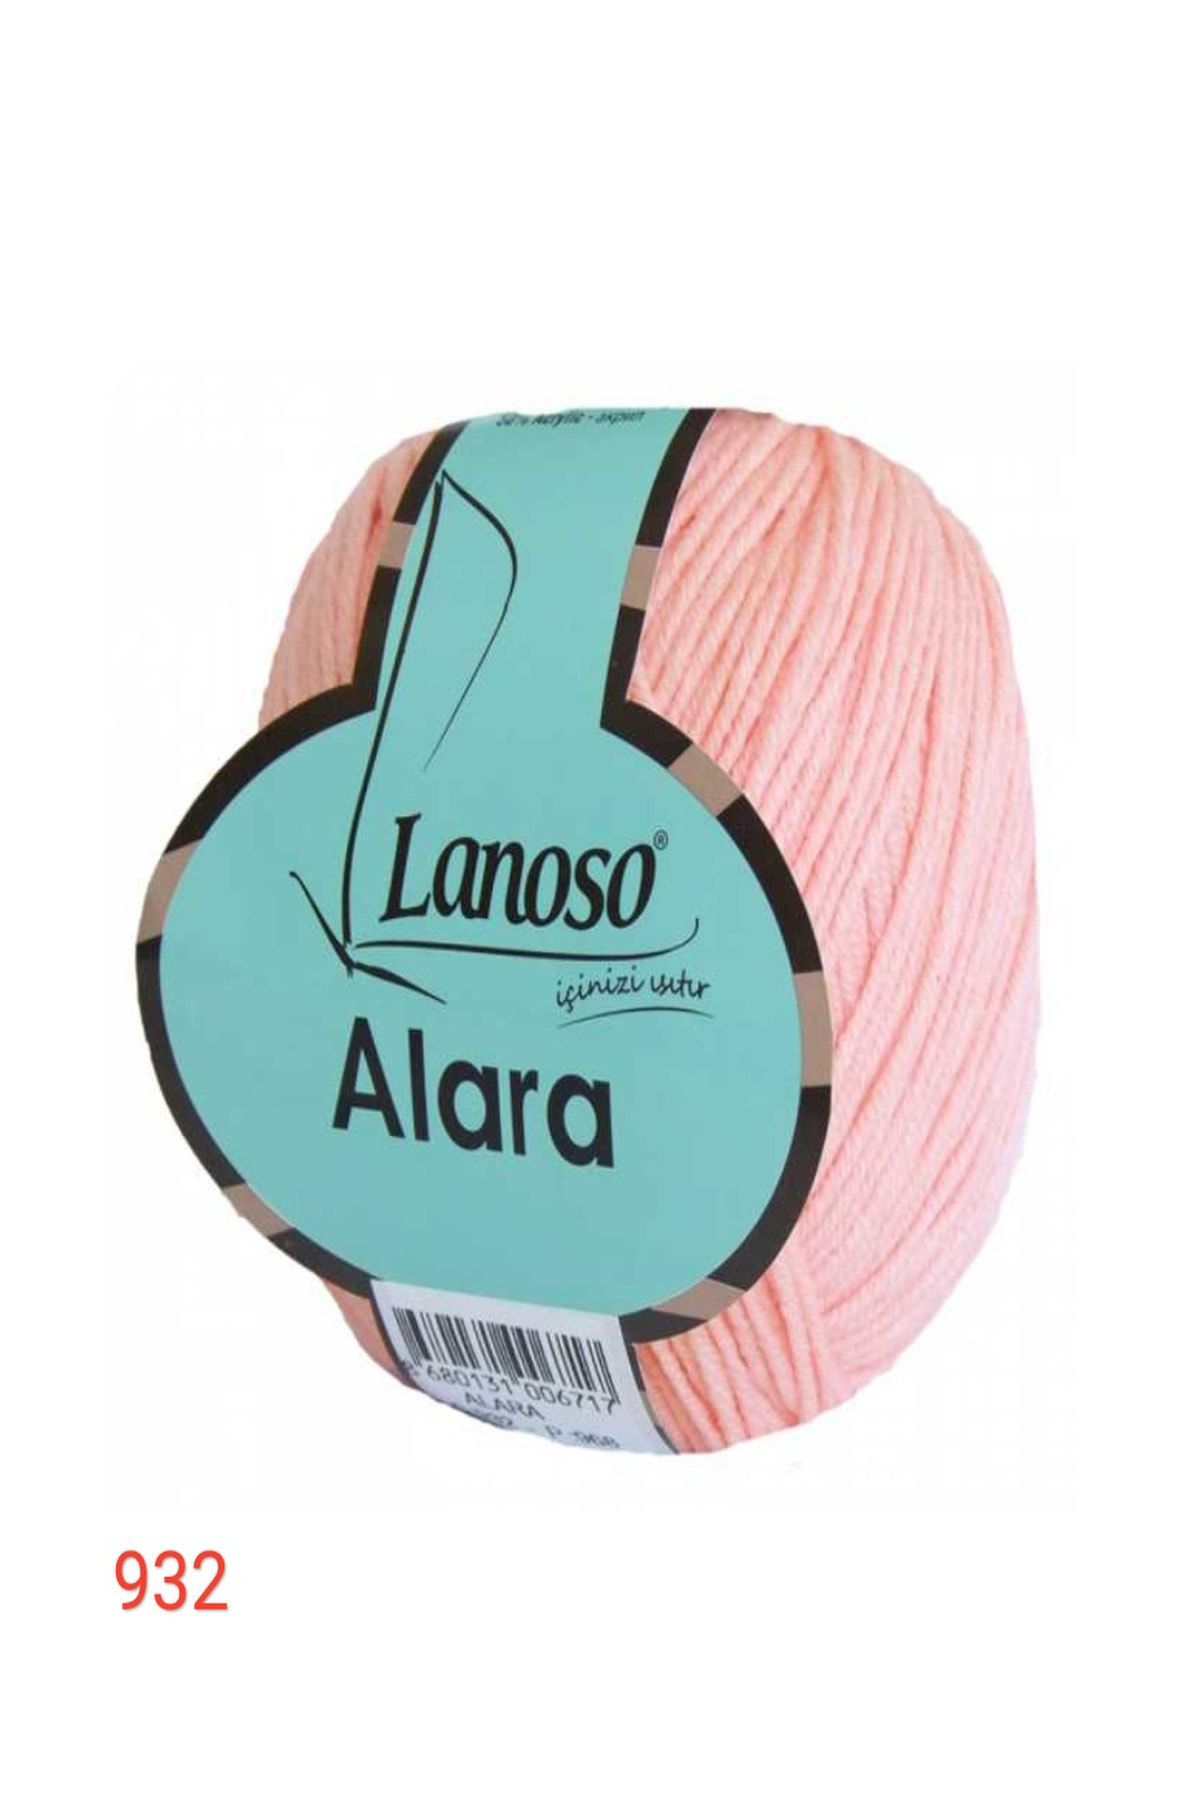 Lanoso Alara Cotton Amigurumi Ipi 50 Gr 932 Fiyatı, Yorumları - Trendyol